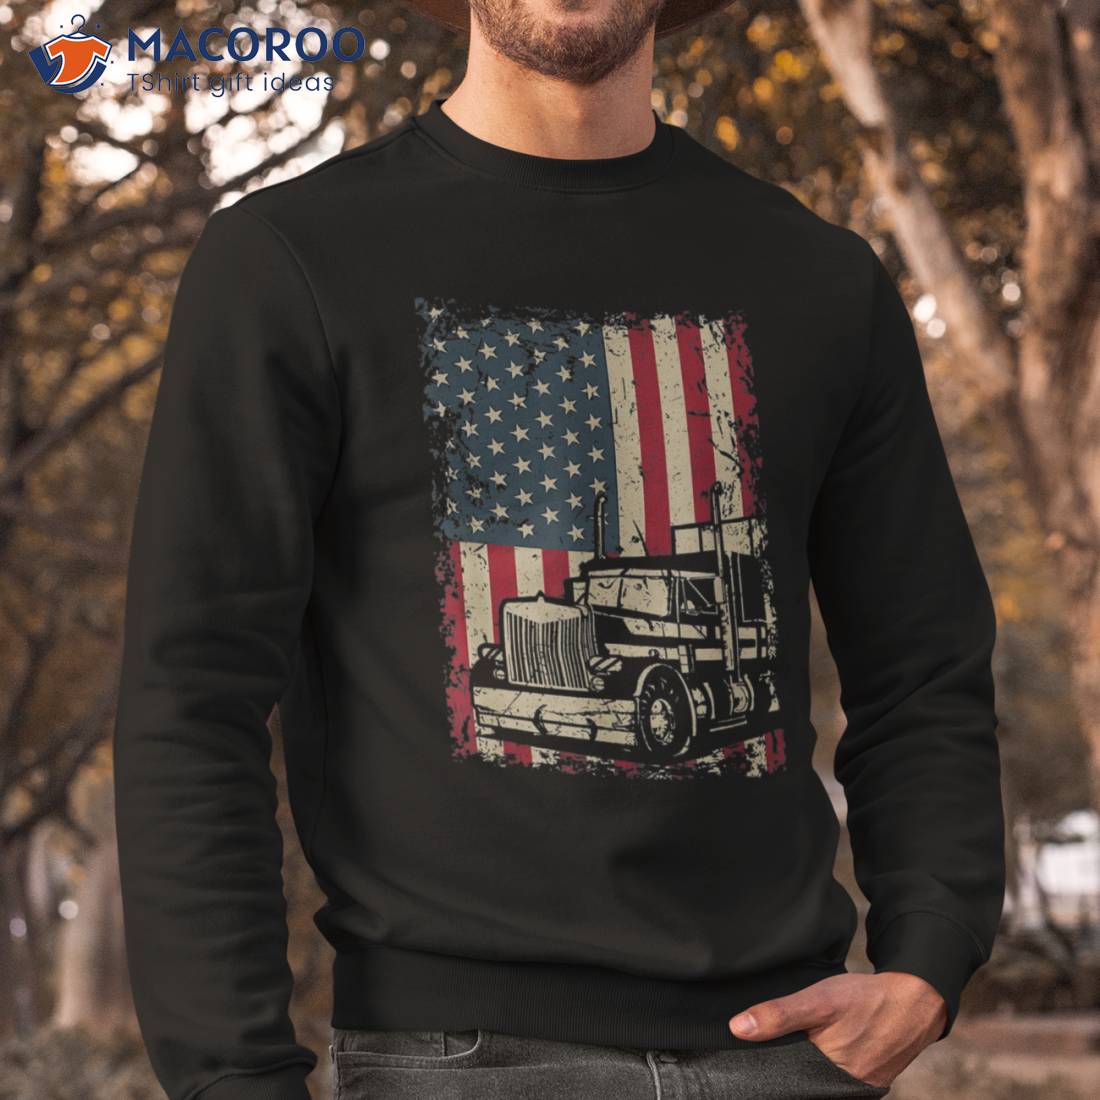 https://images.macoroo.com/wp-content/uploads/2023/04/truck-driver-usa-flag-gift-patriotic-trucker-shirt-sweatshirt.jpg